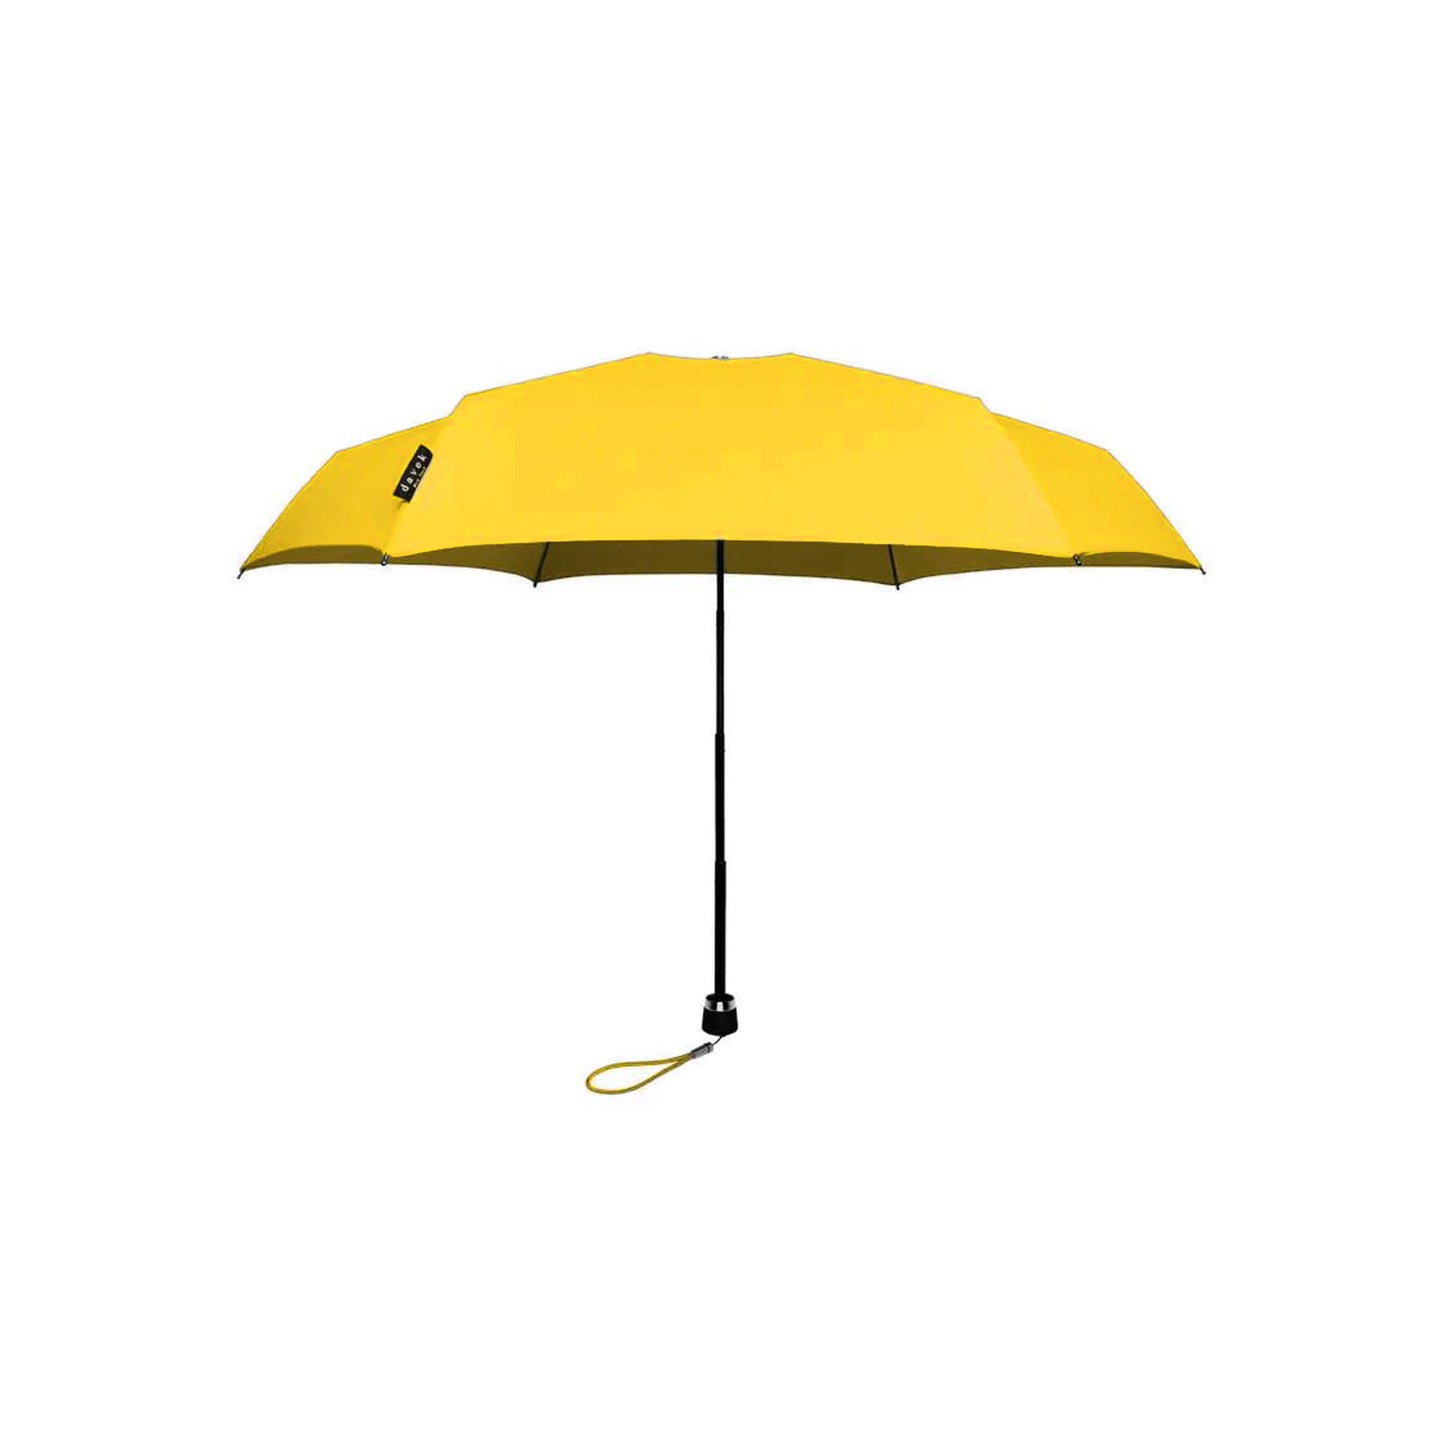 Davek Mini Umbrella in Yellow